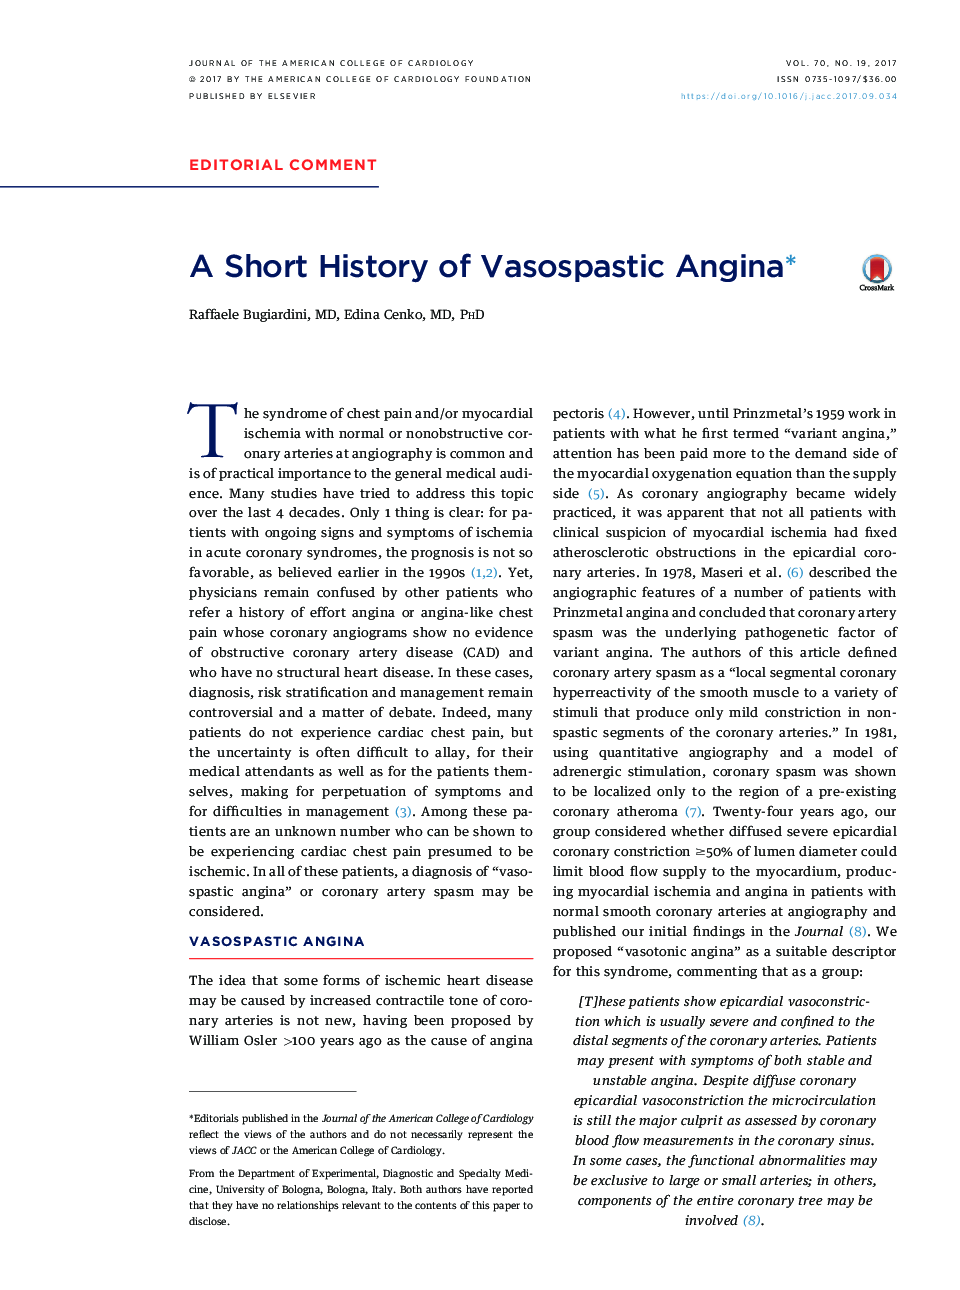 A Short History of Vasospastic Anginaâ